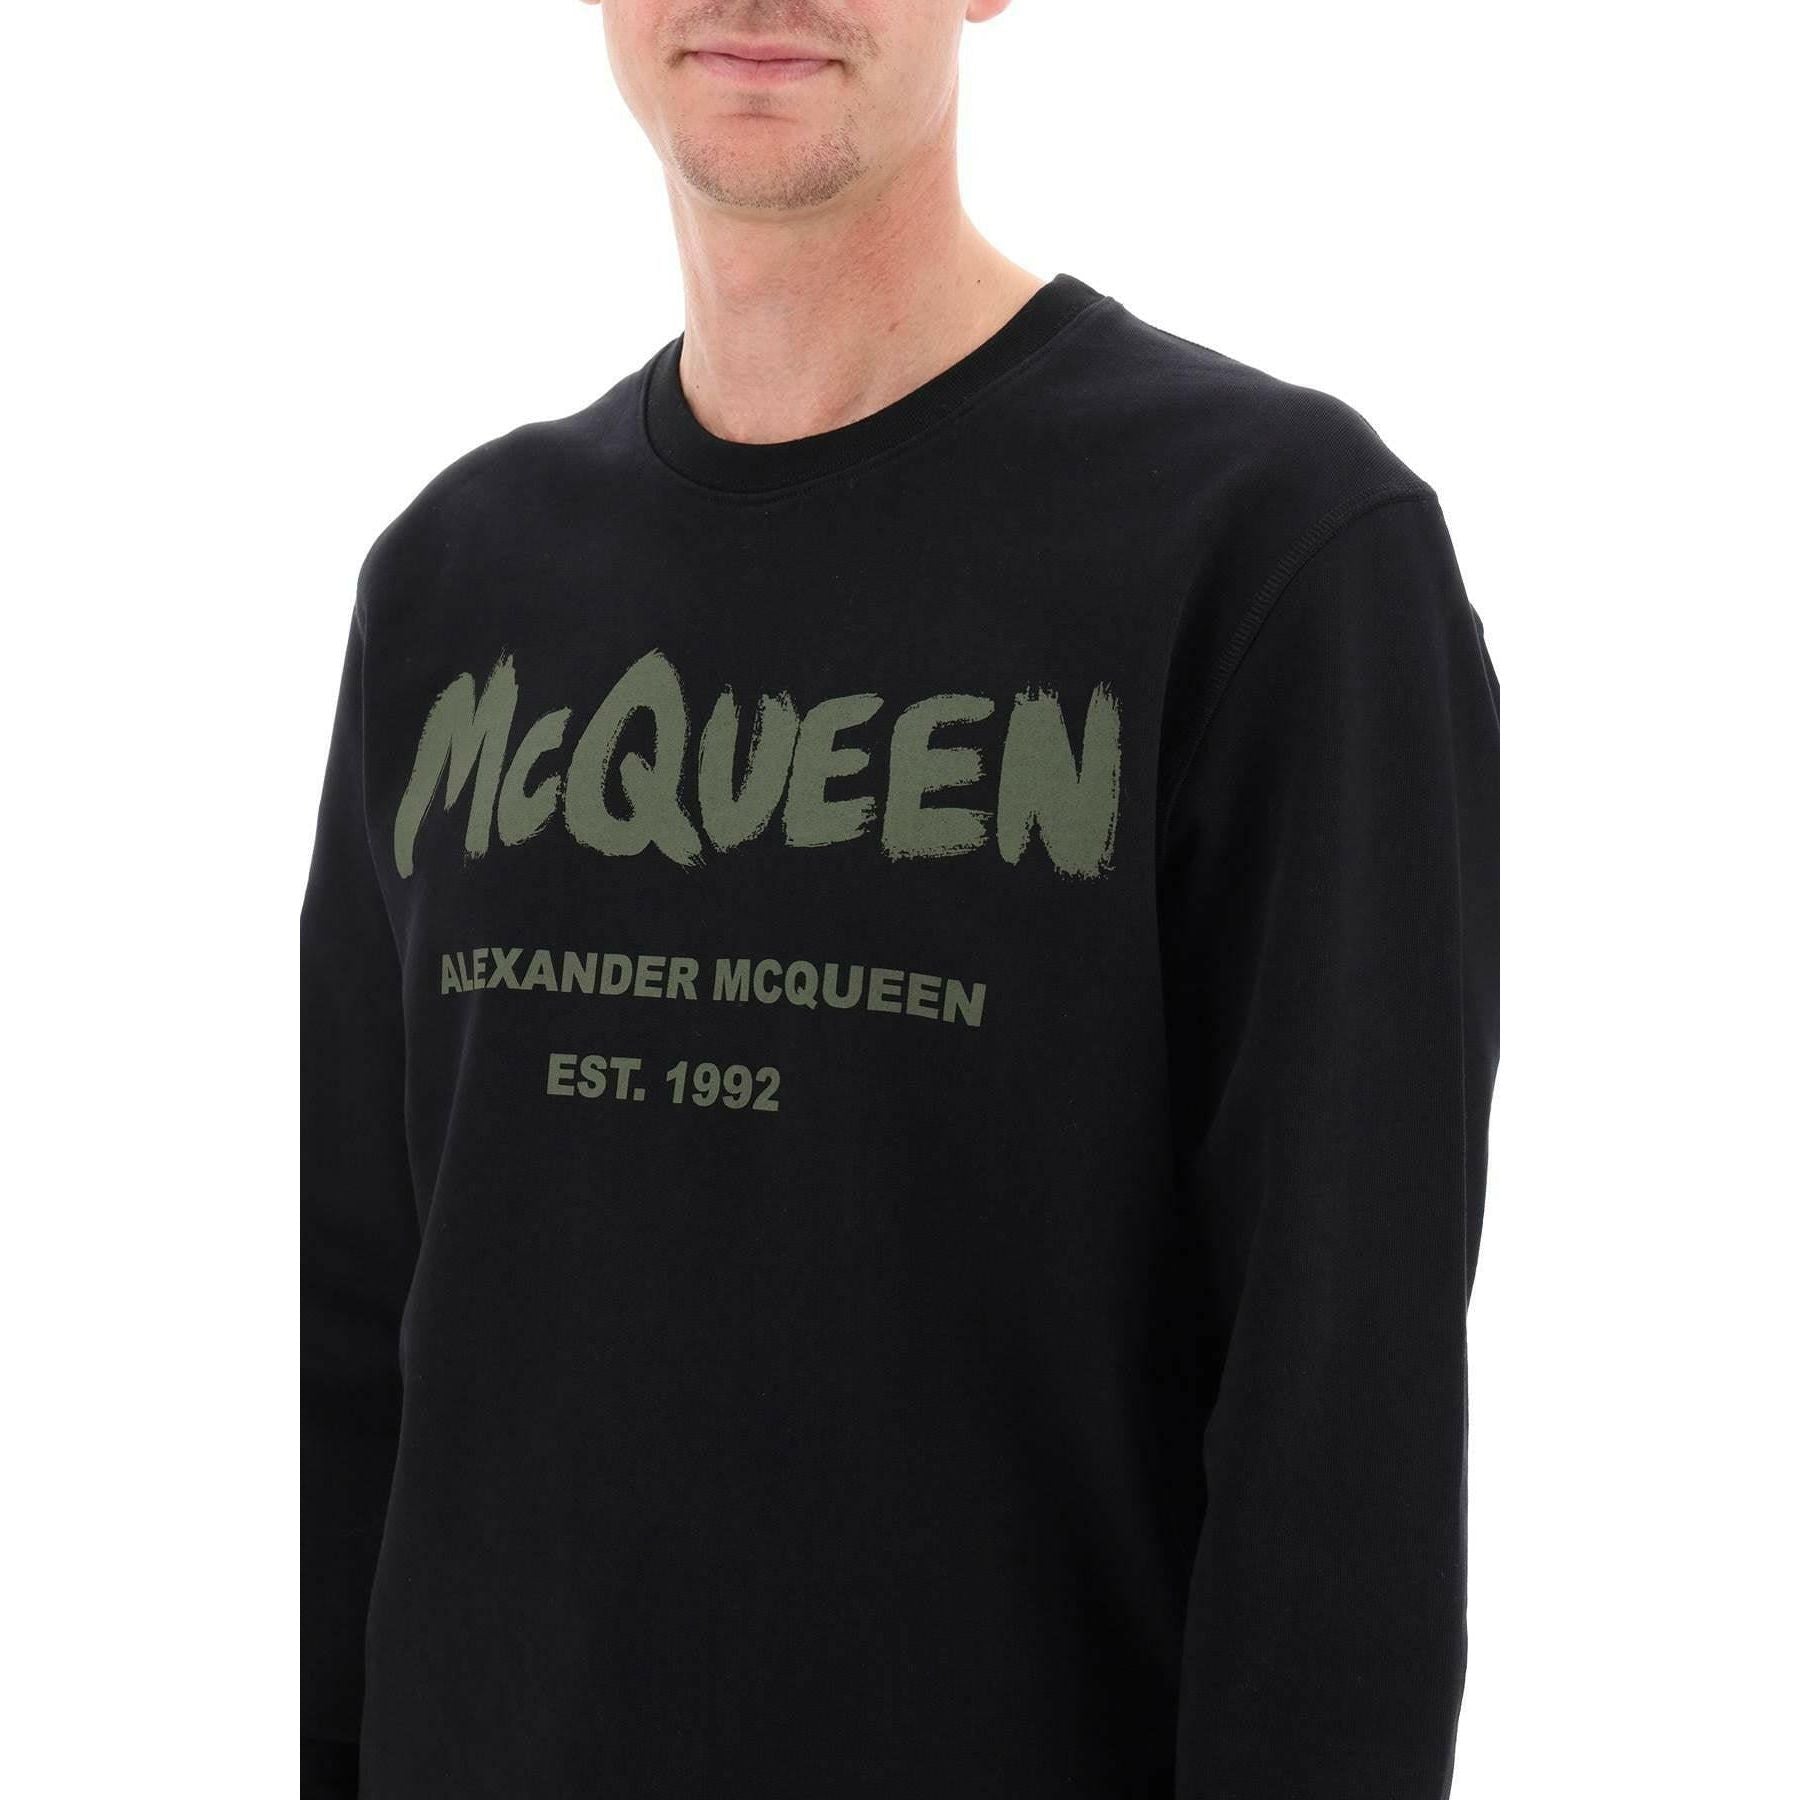 McQueen Graffiti Sweatshirt ALEXANDER MCQUEEN JOHN JULIA.